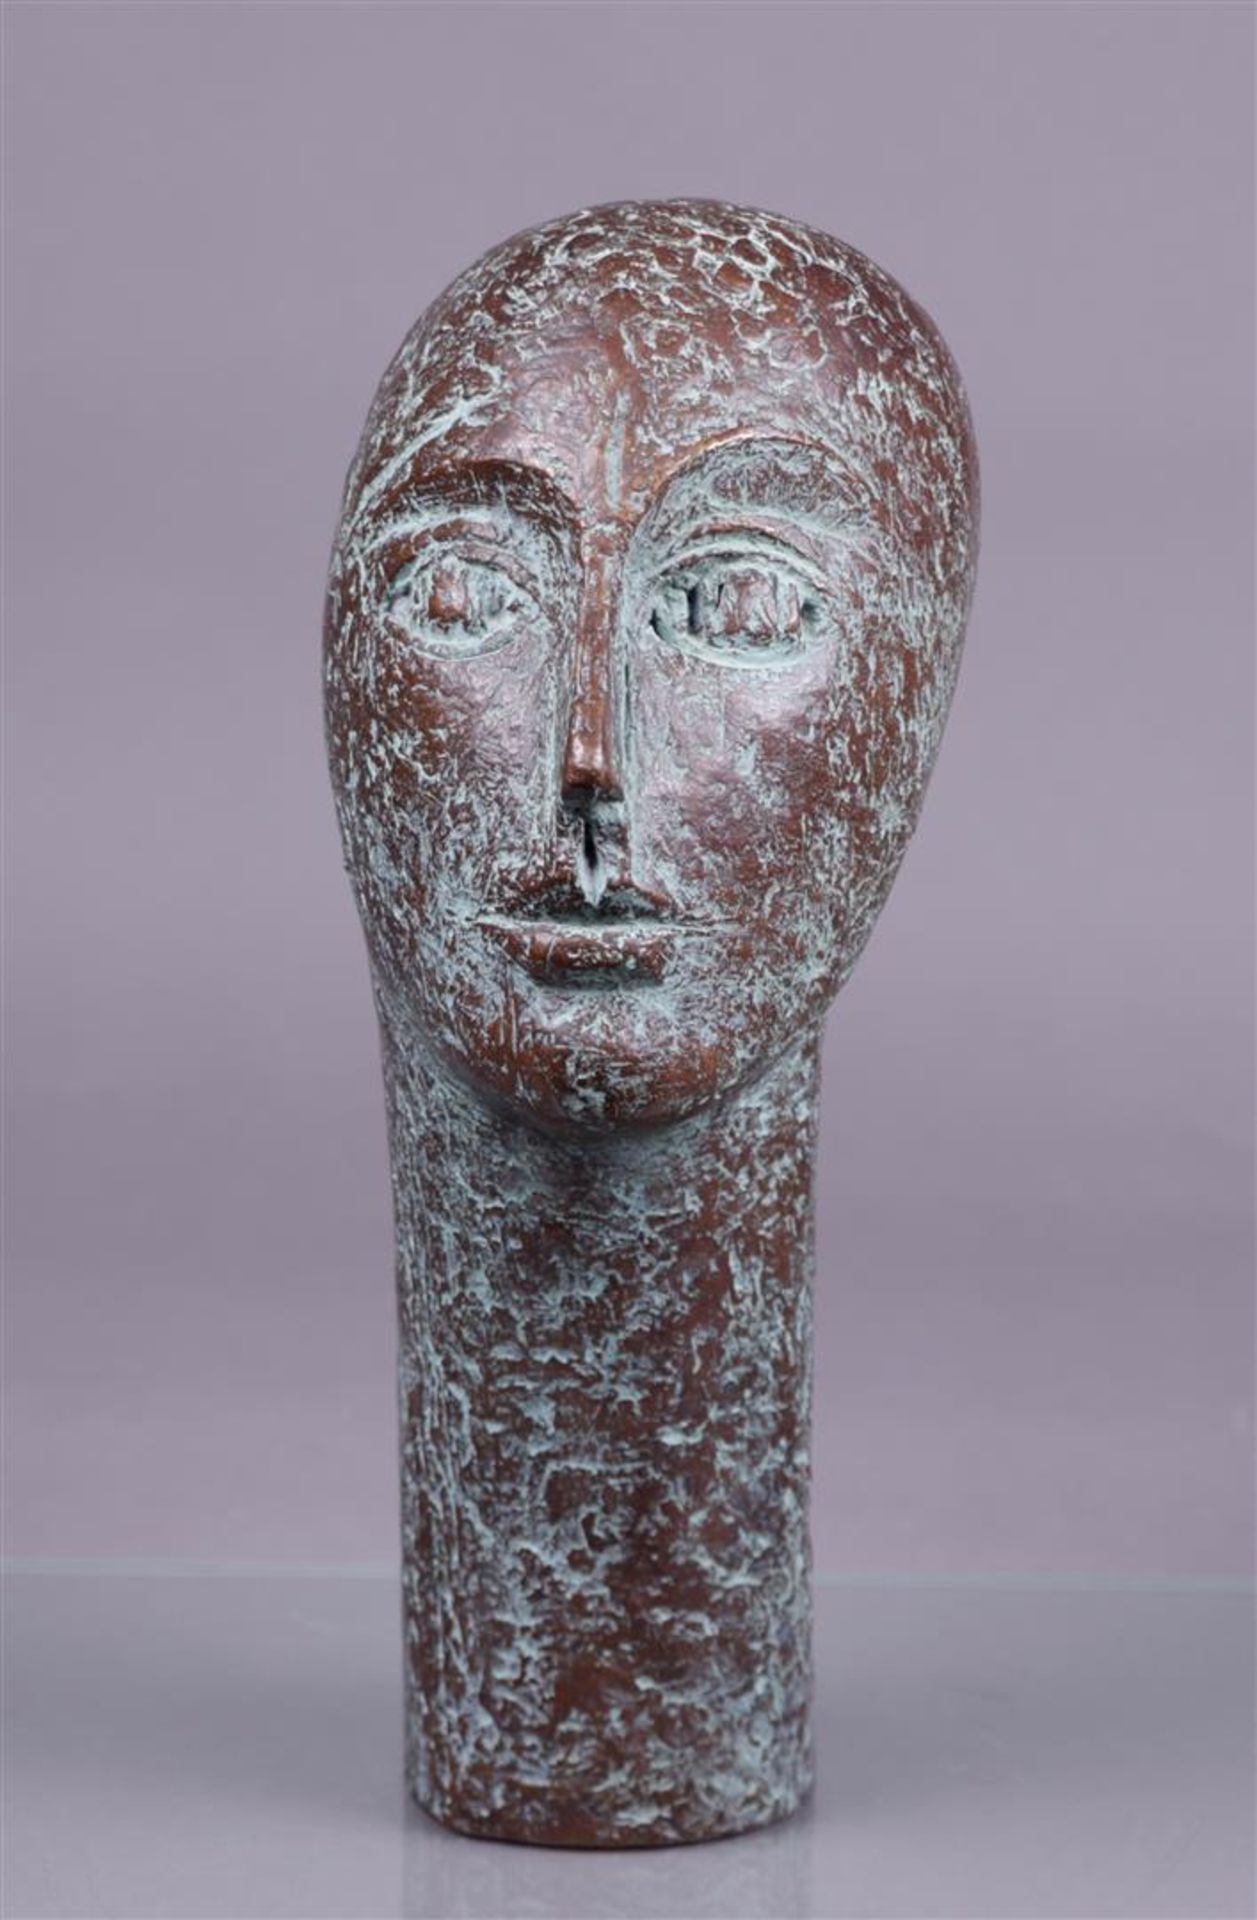 Els Jansen, bronze head monogrammed and numbered 3/8.
H.: 38 cm.